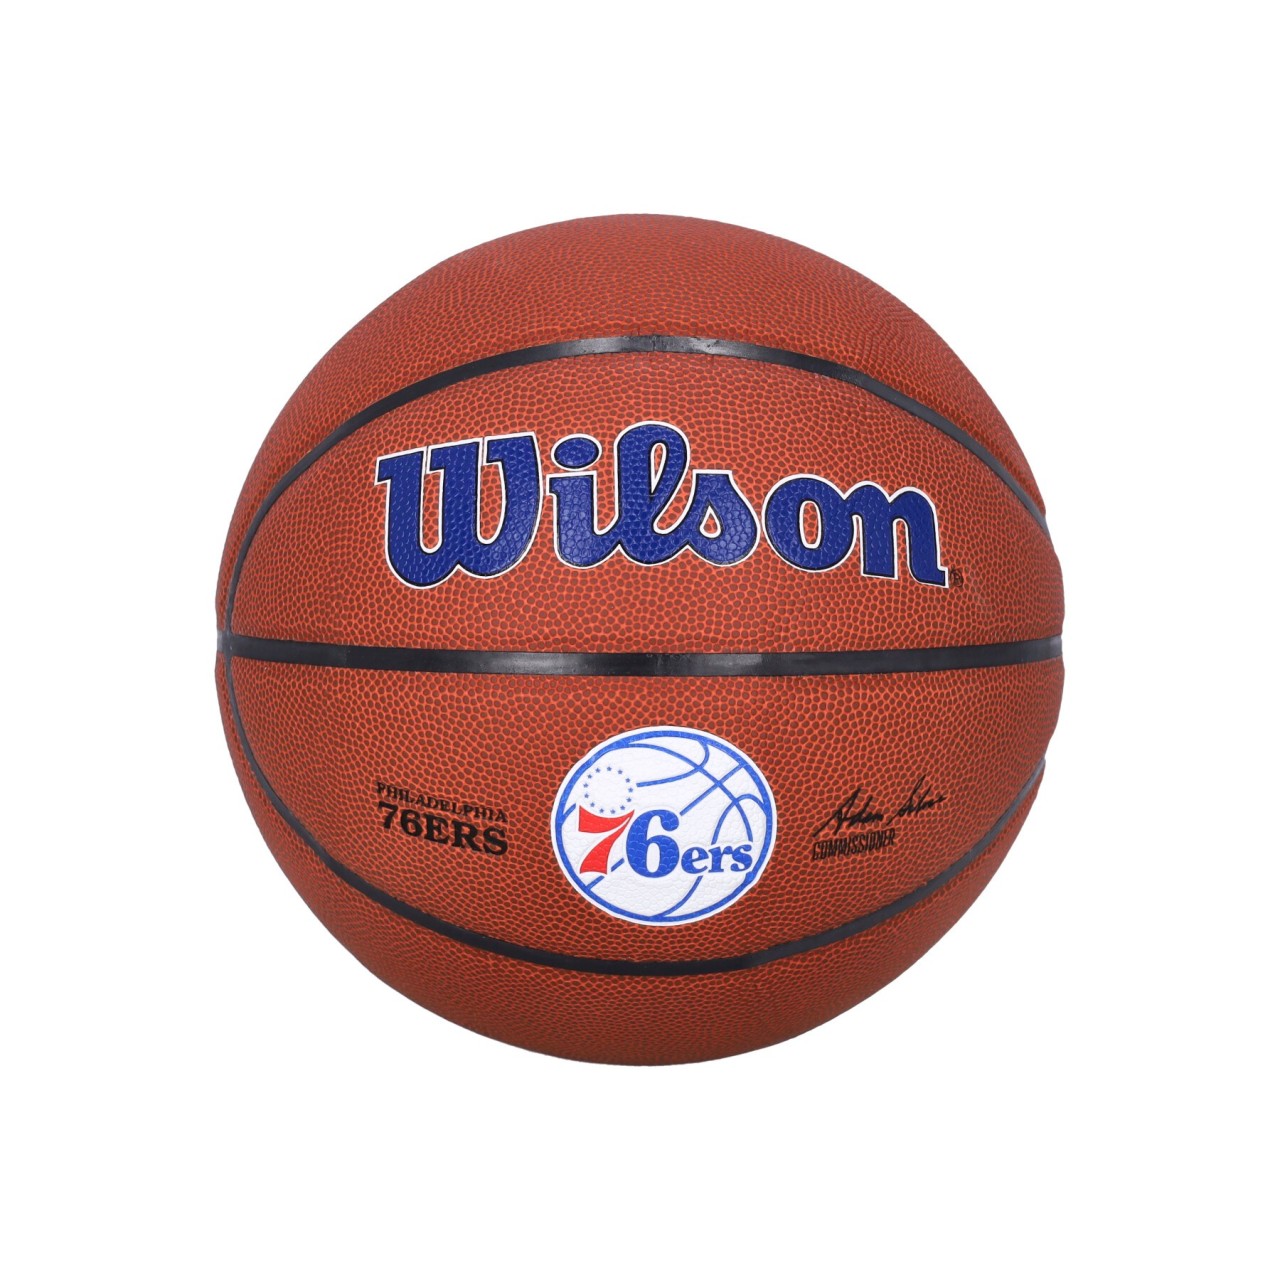 WILSON TEAM NBA TEAM ALLIANCE BASKETBALL SIZE 7 PHI76E WTB3100XBPHI